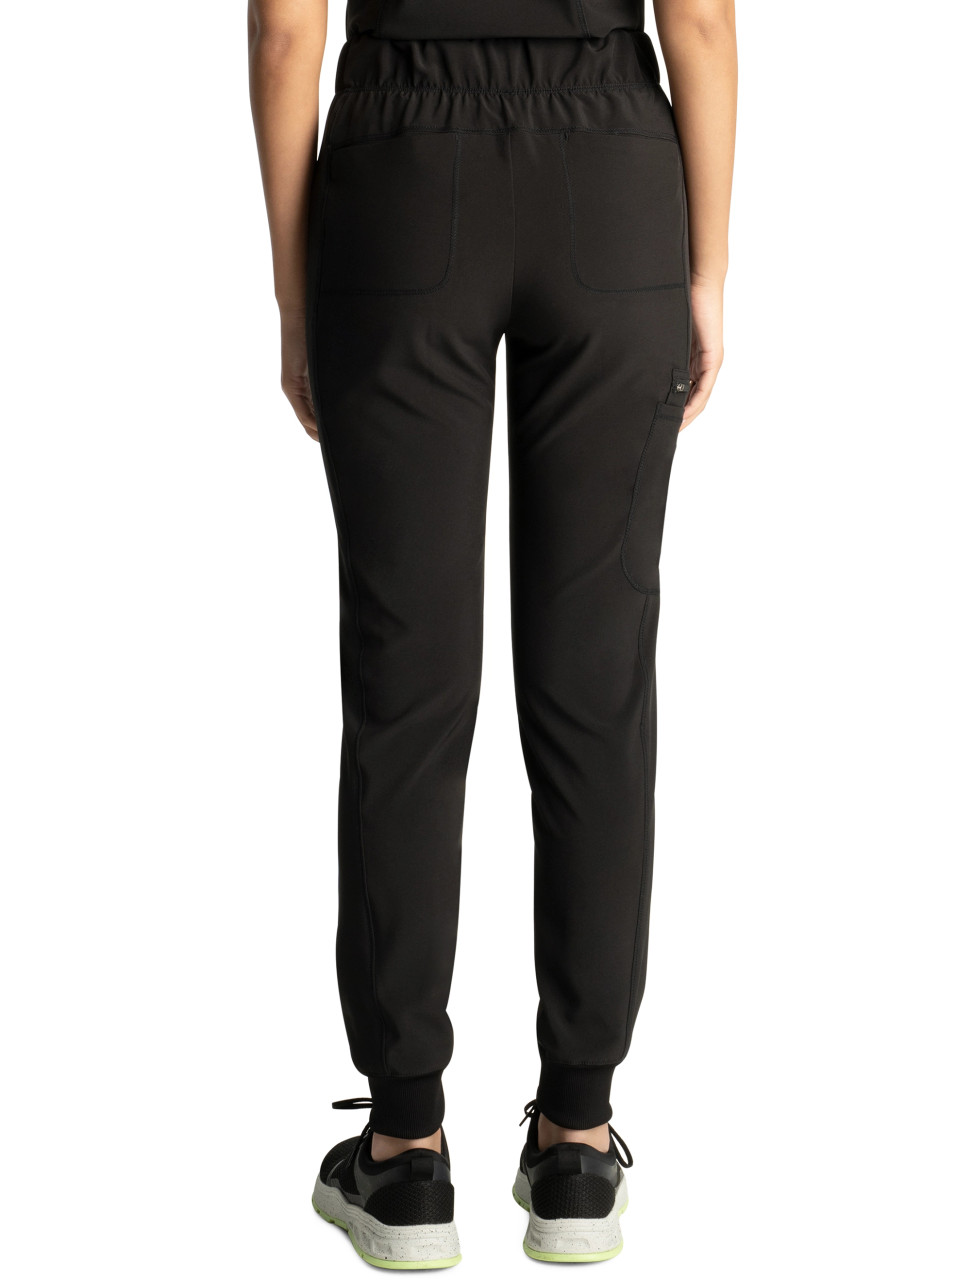 HERA - Core Logo Sweatpants - Black - Size L - BRAND NEW SEALED | eBay